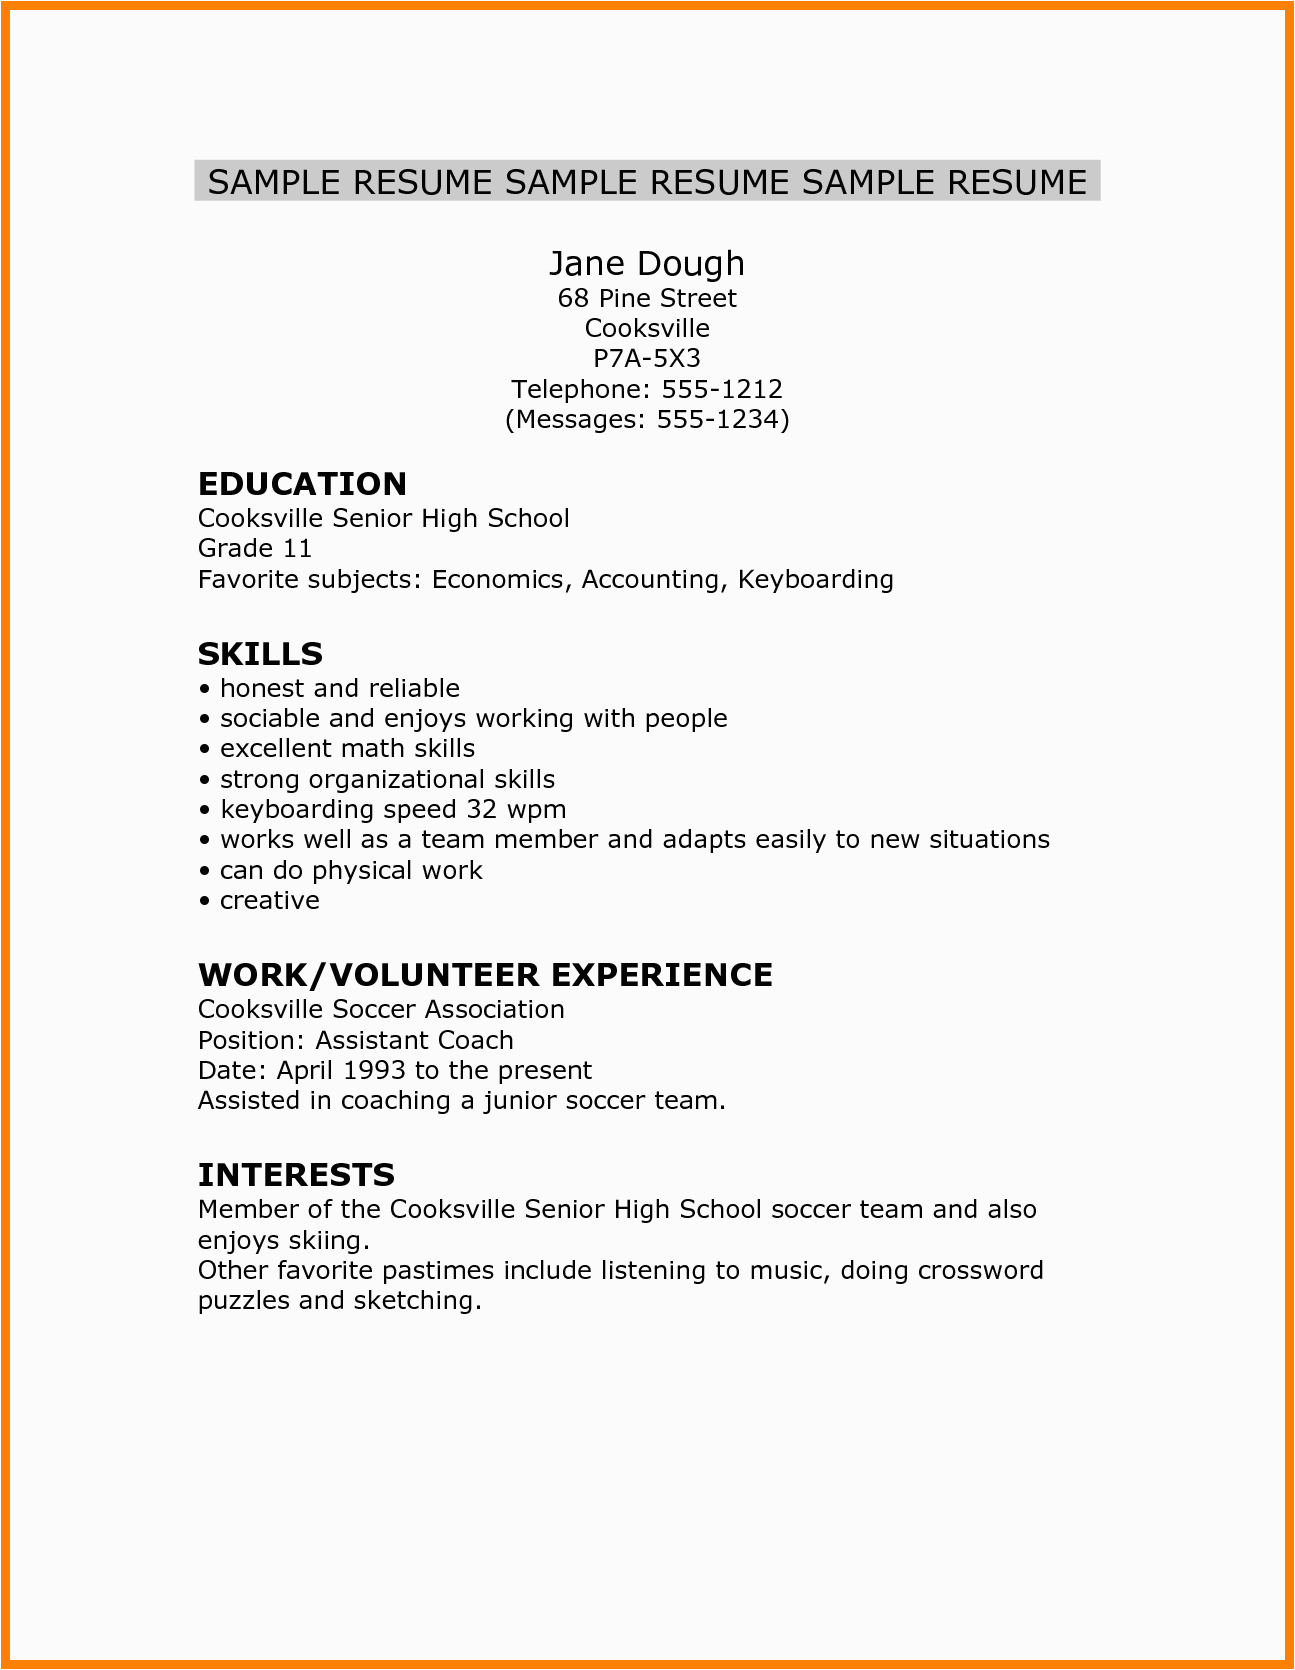 Sample Resume for Fresh High School Graduates Resume for Fresh Graduate Accounting Student Best Resume Examples